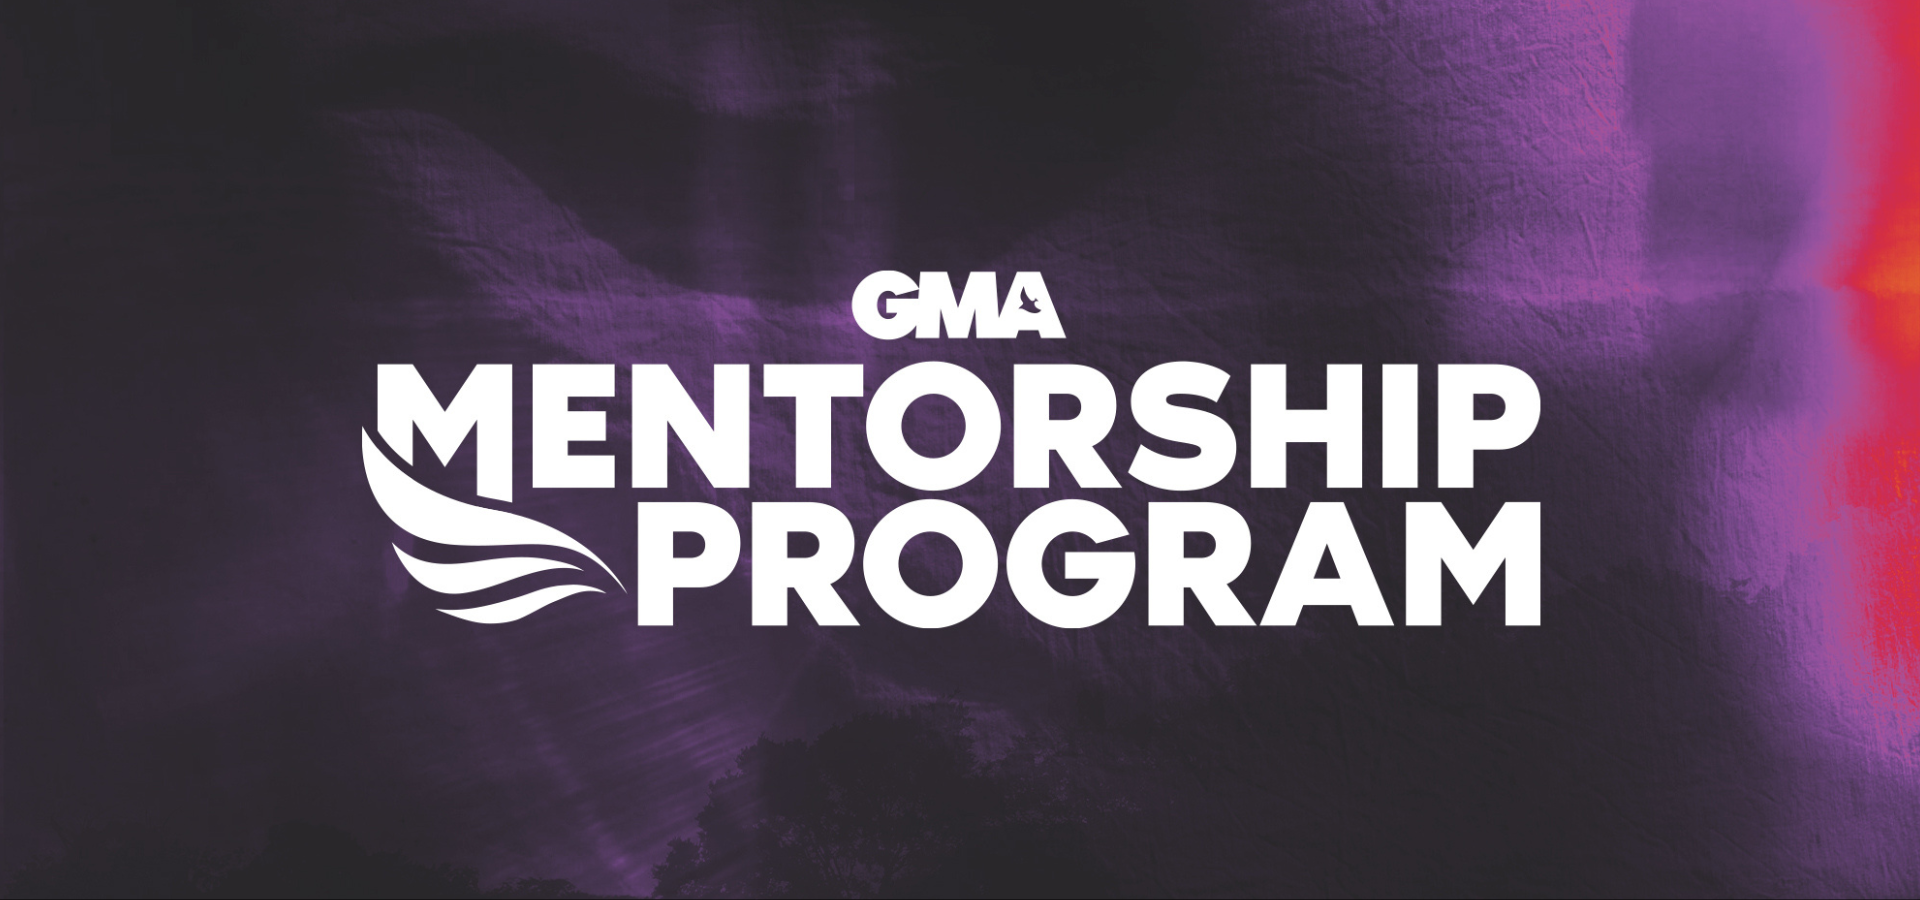 Gospel Music Association Launches Mentorship Program For Future Industry Leaders